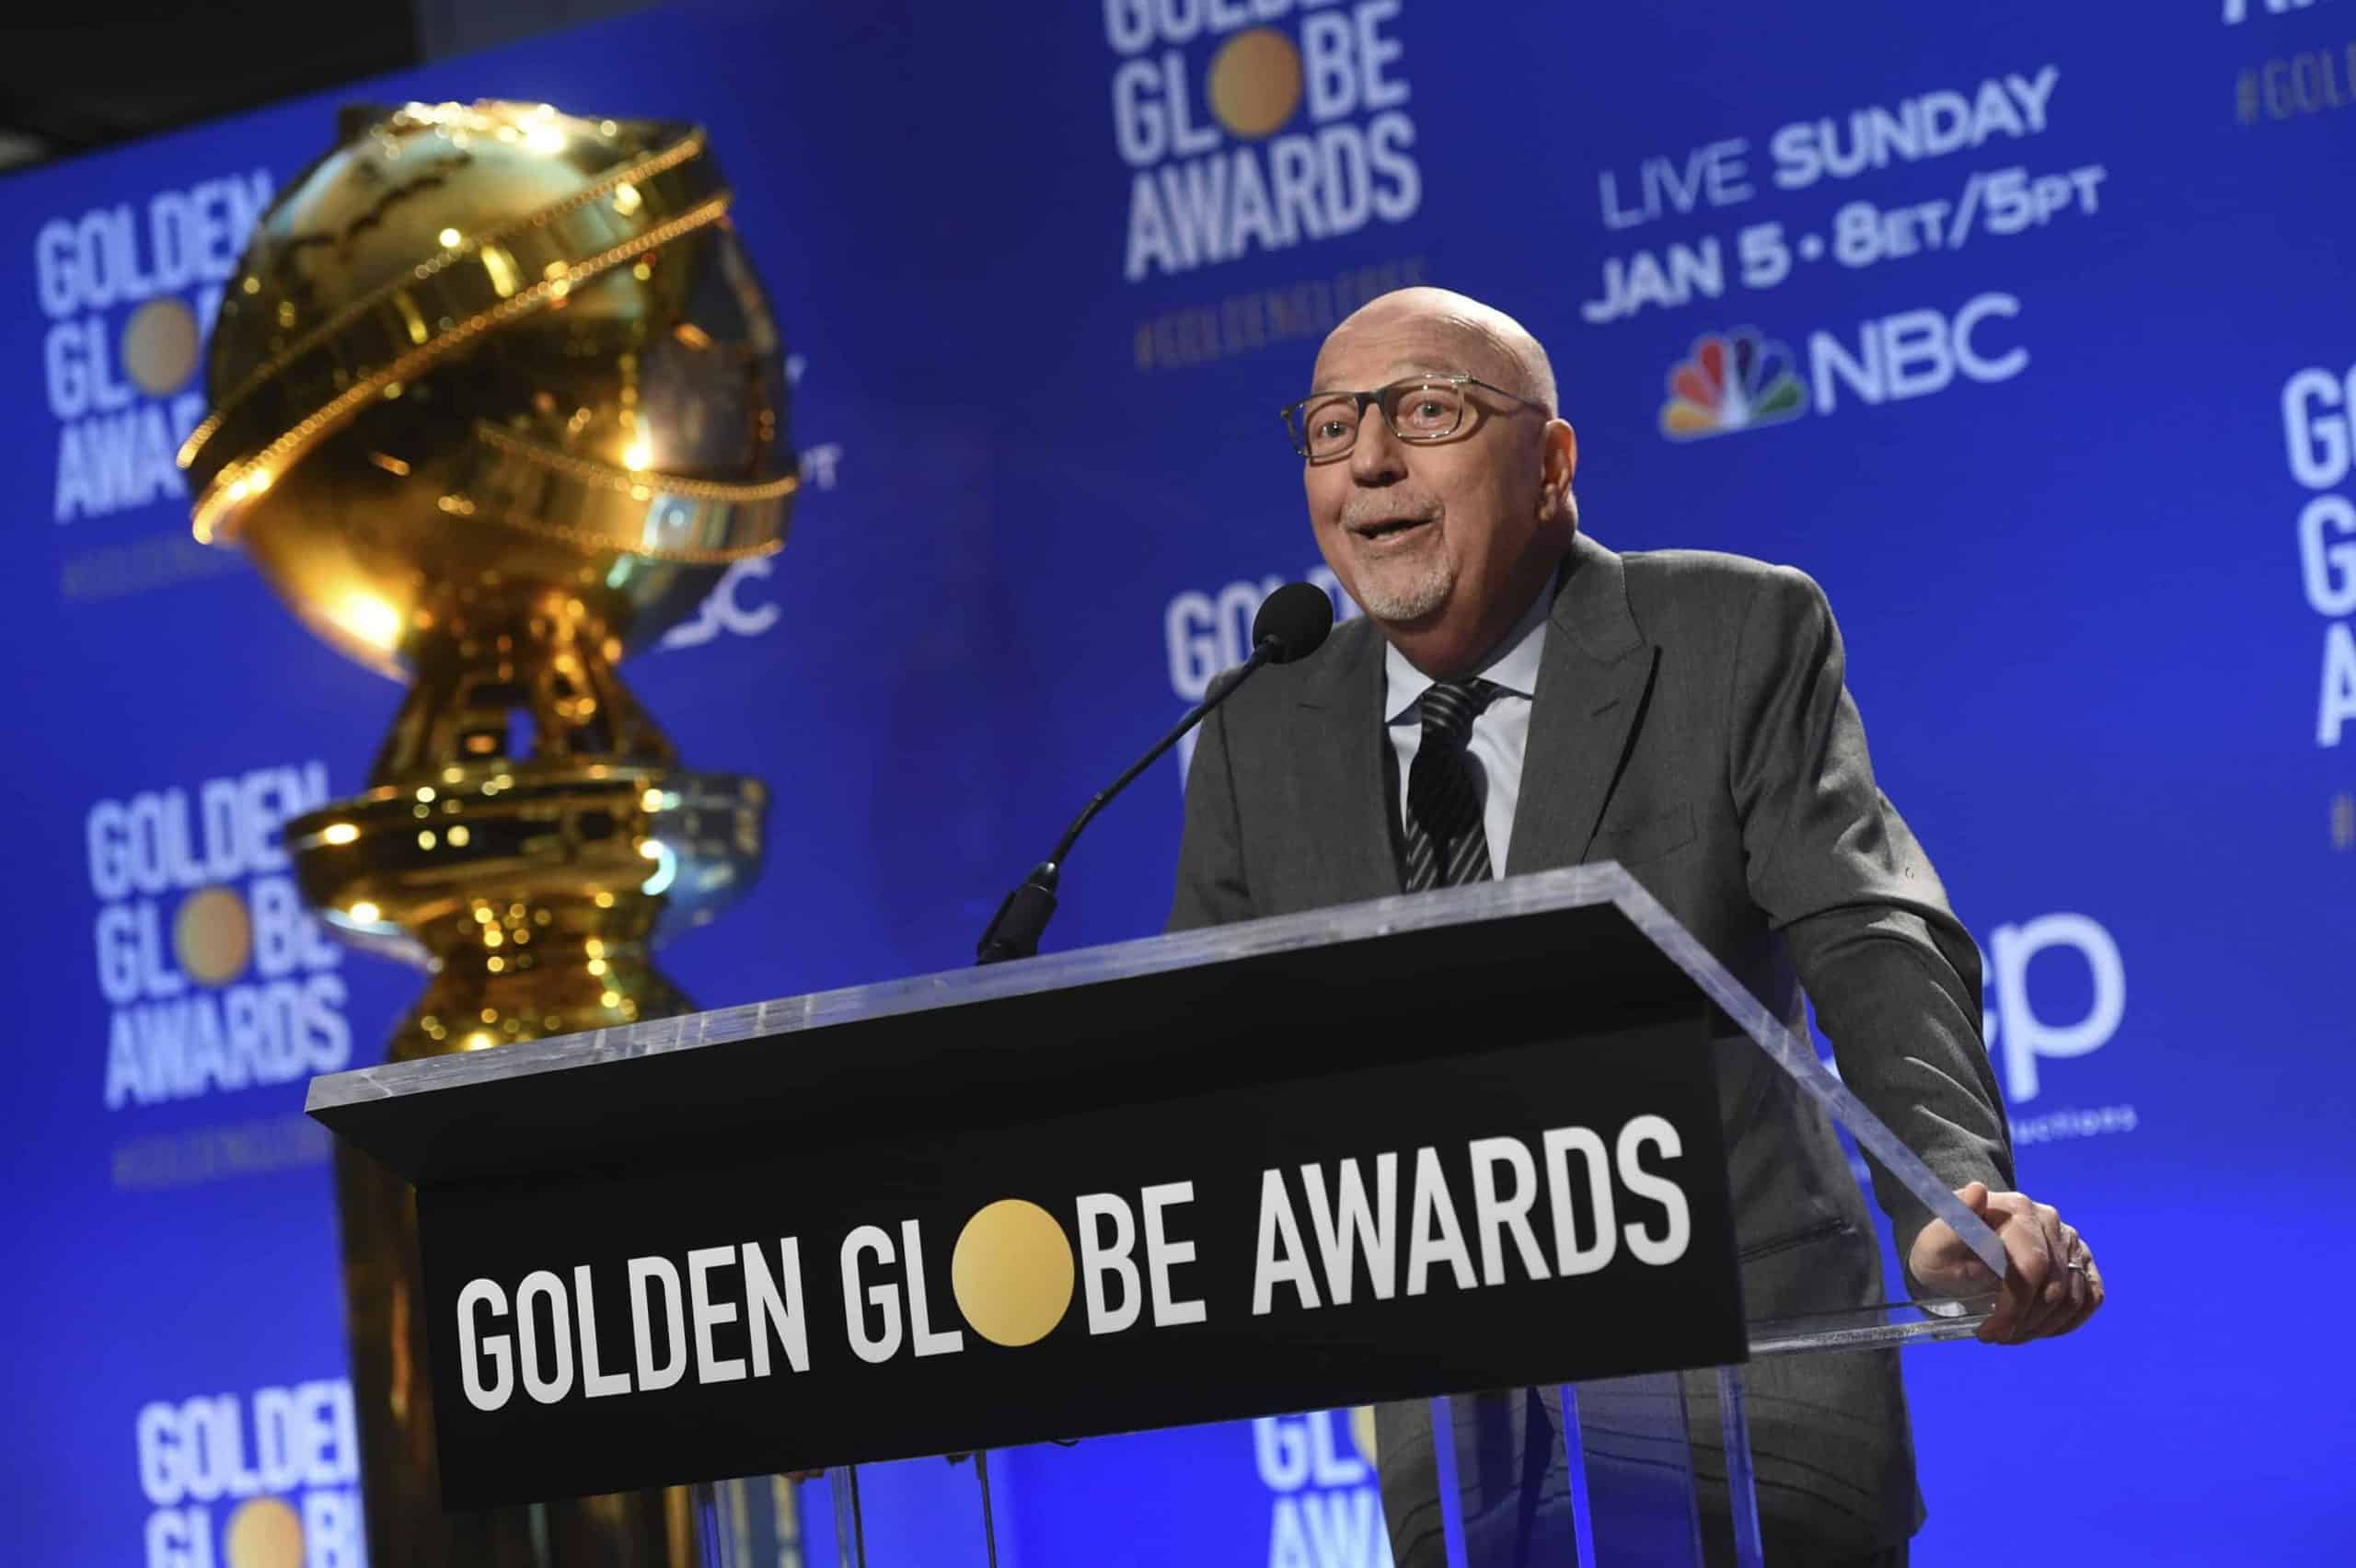 Golden Globes to serve plant-based meal at awards ceremony